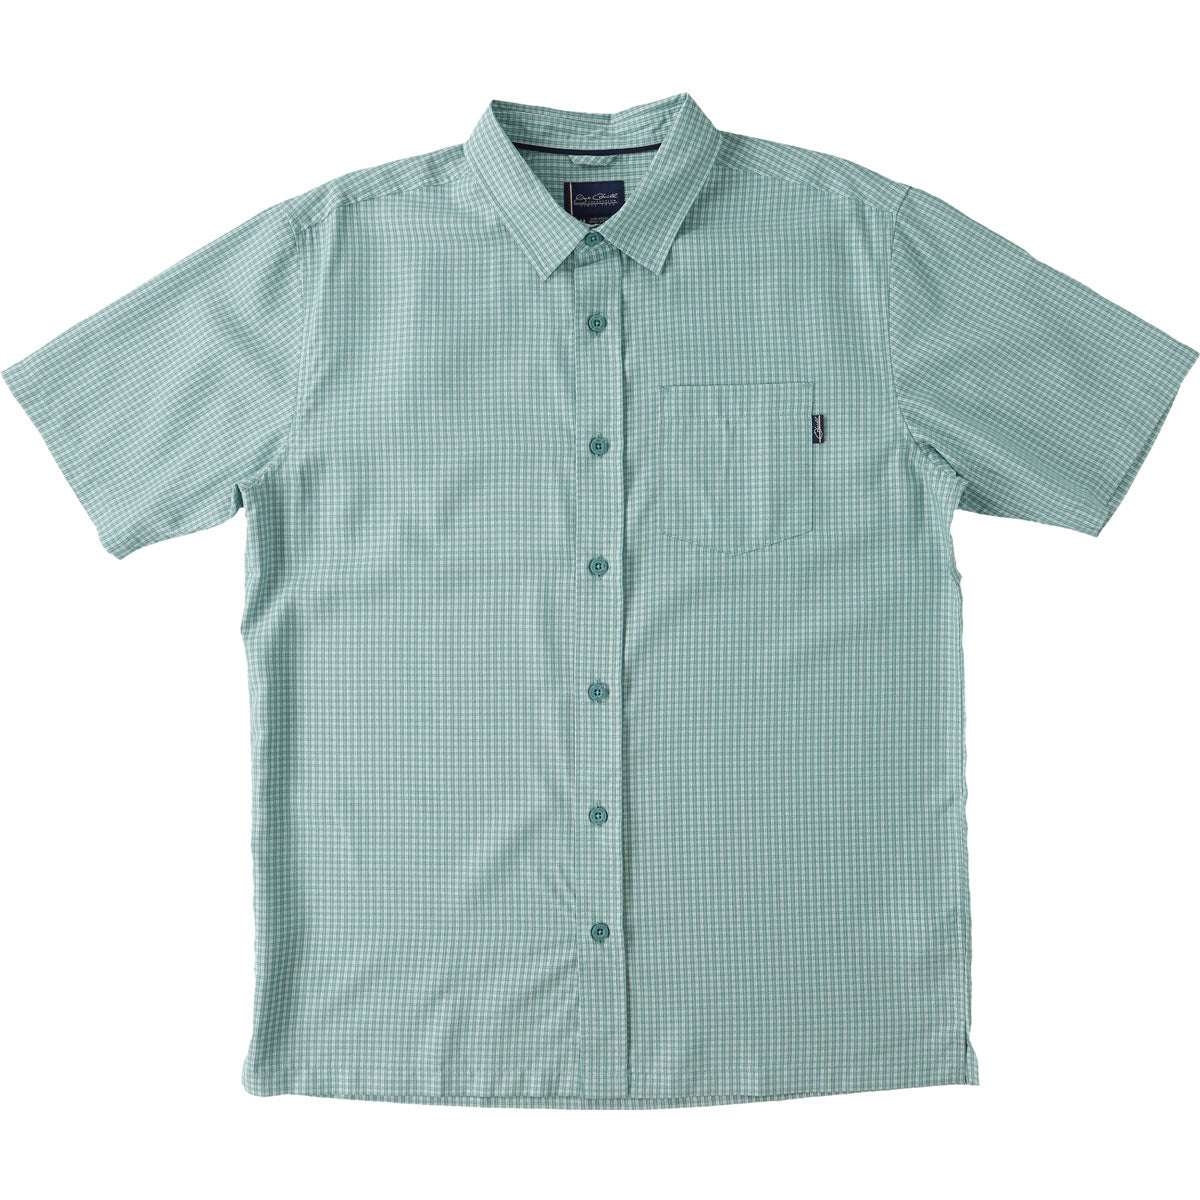 O'Neill Jack O'Neill Ford Men's Button Up Short-Sleeve Shirts - Jade Green